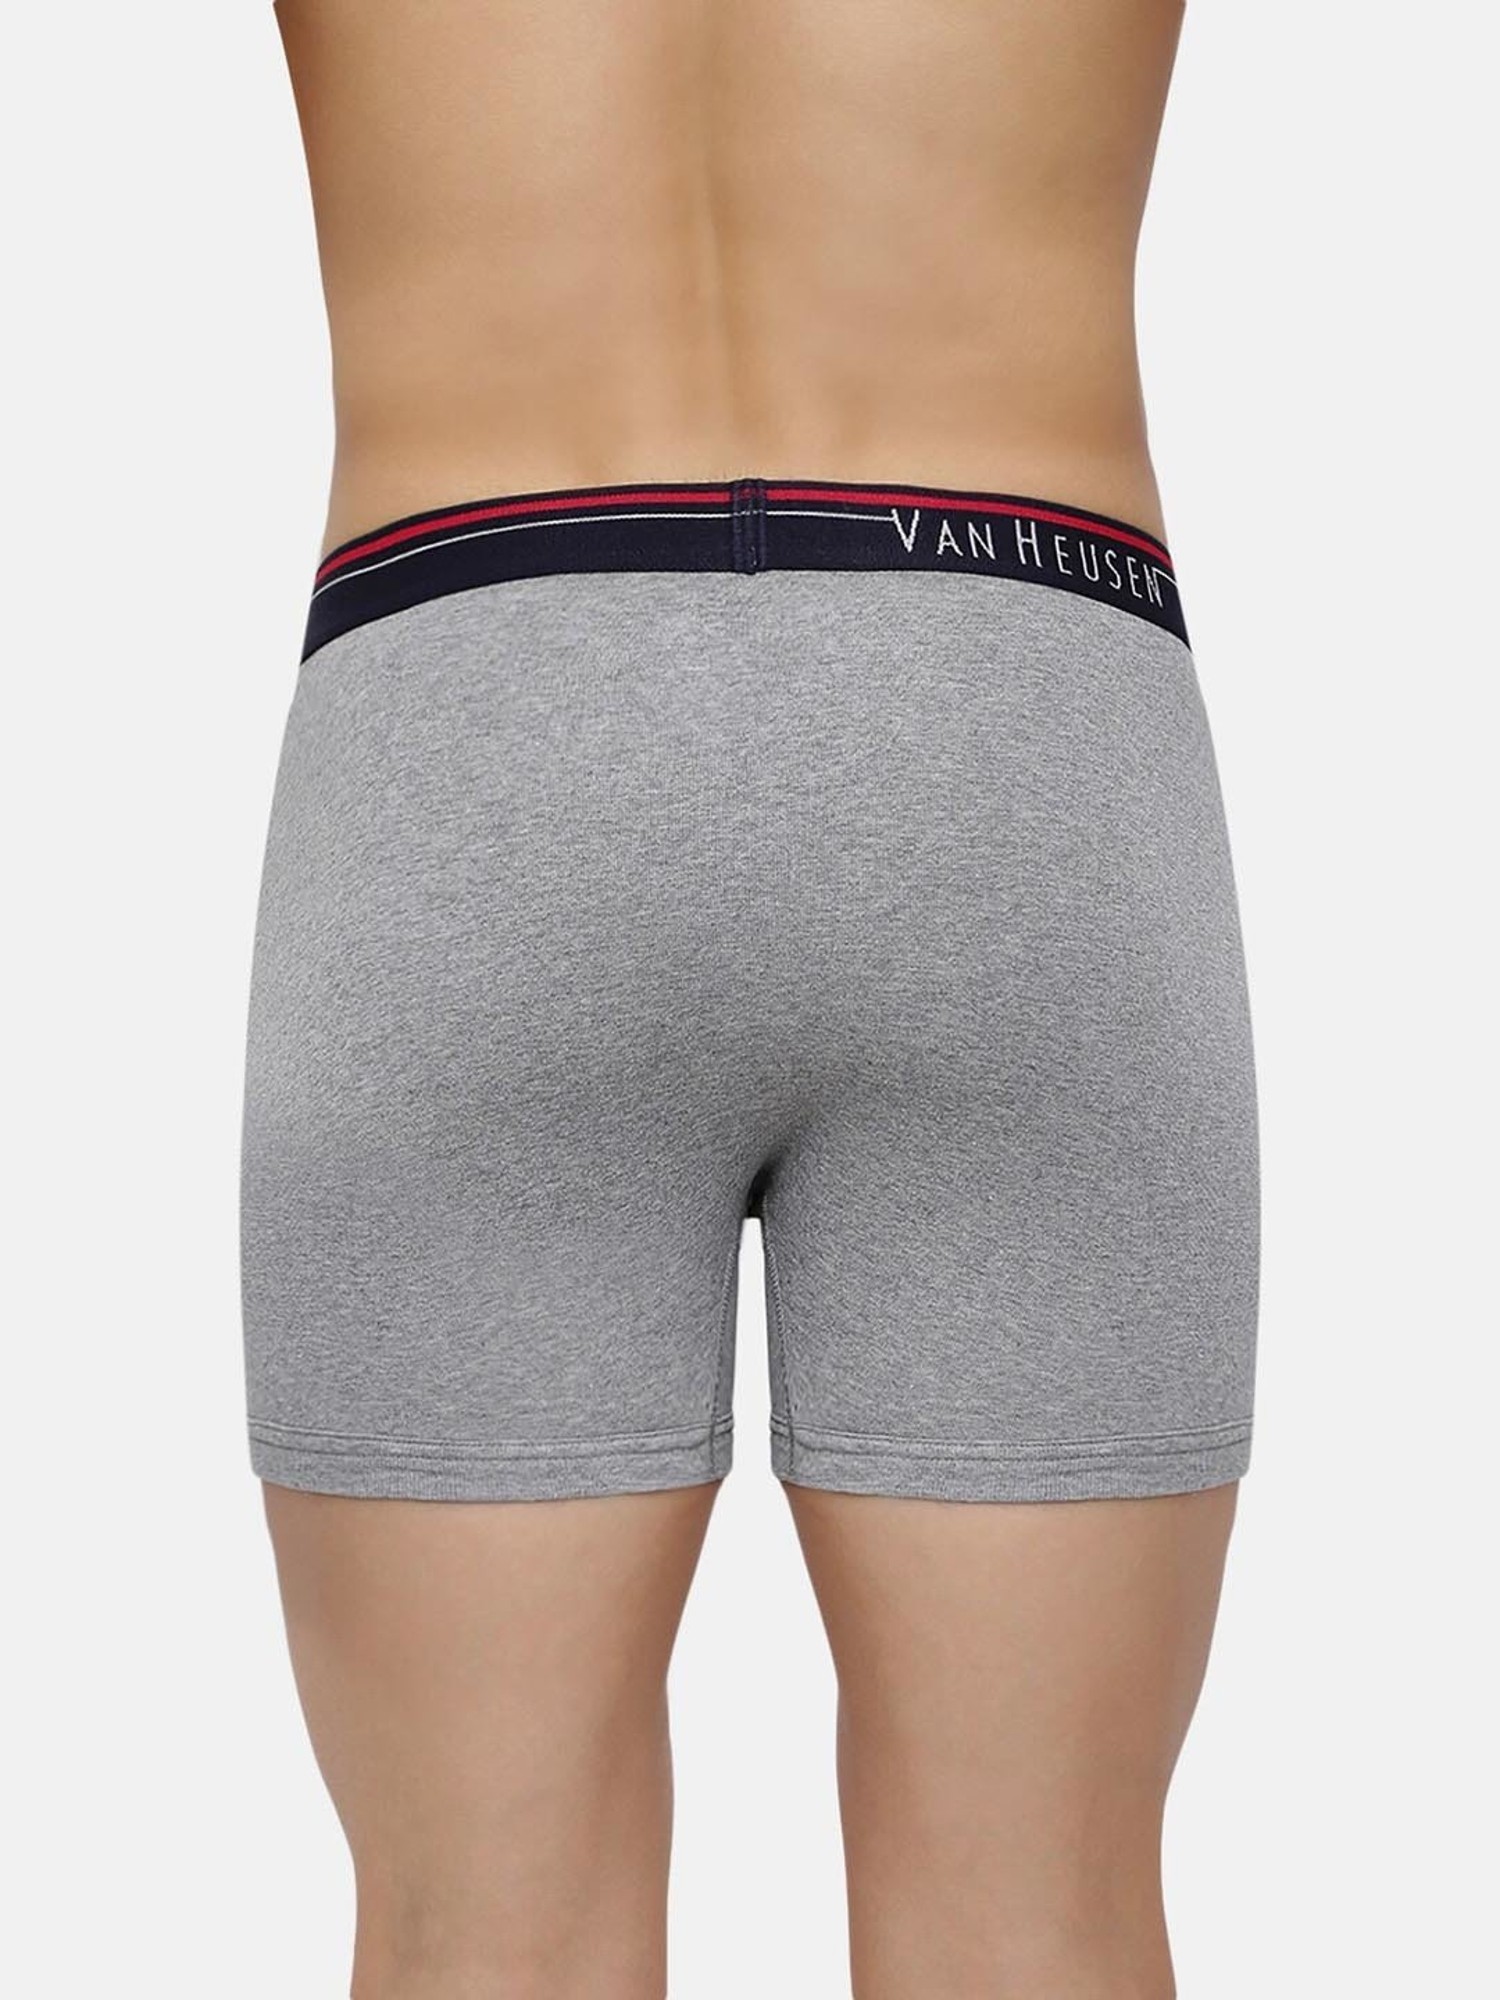 Buy Van Heusen Innerwear Multi Cotton Regular Fit Trunks - Pack Of